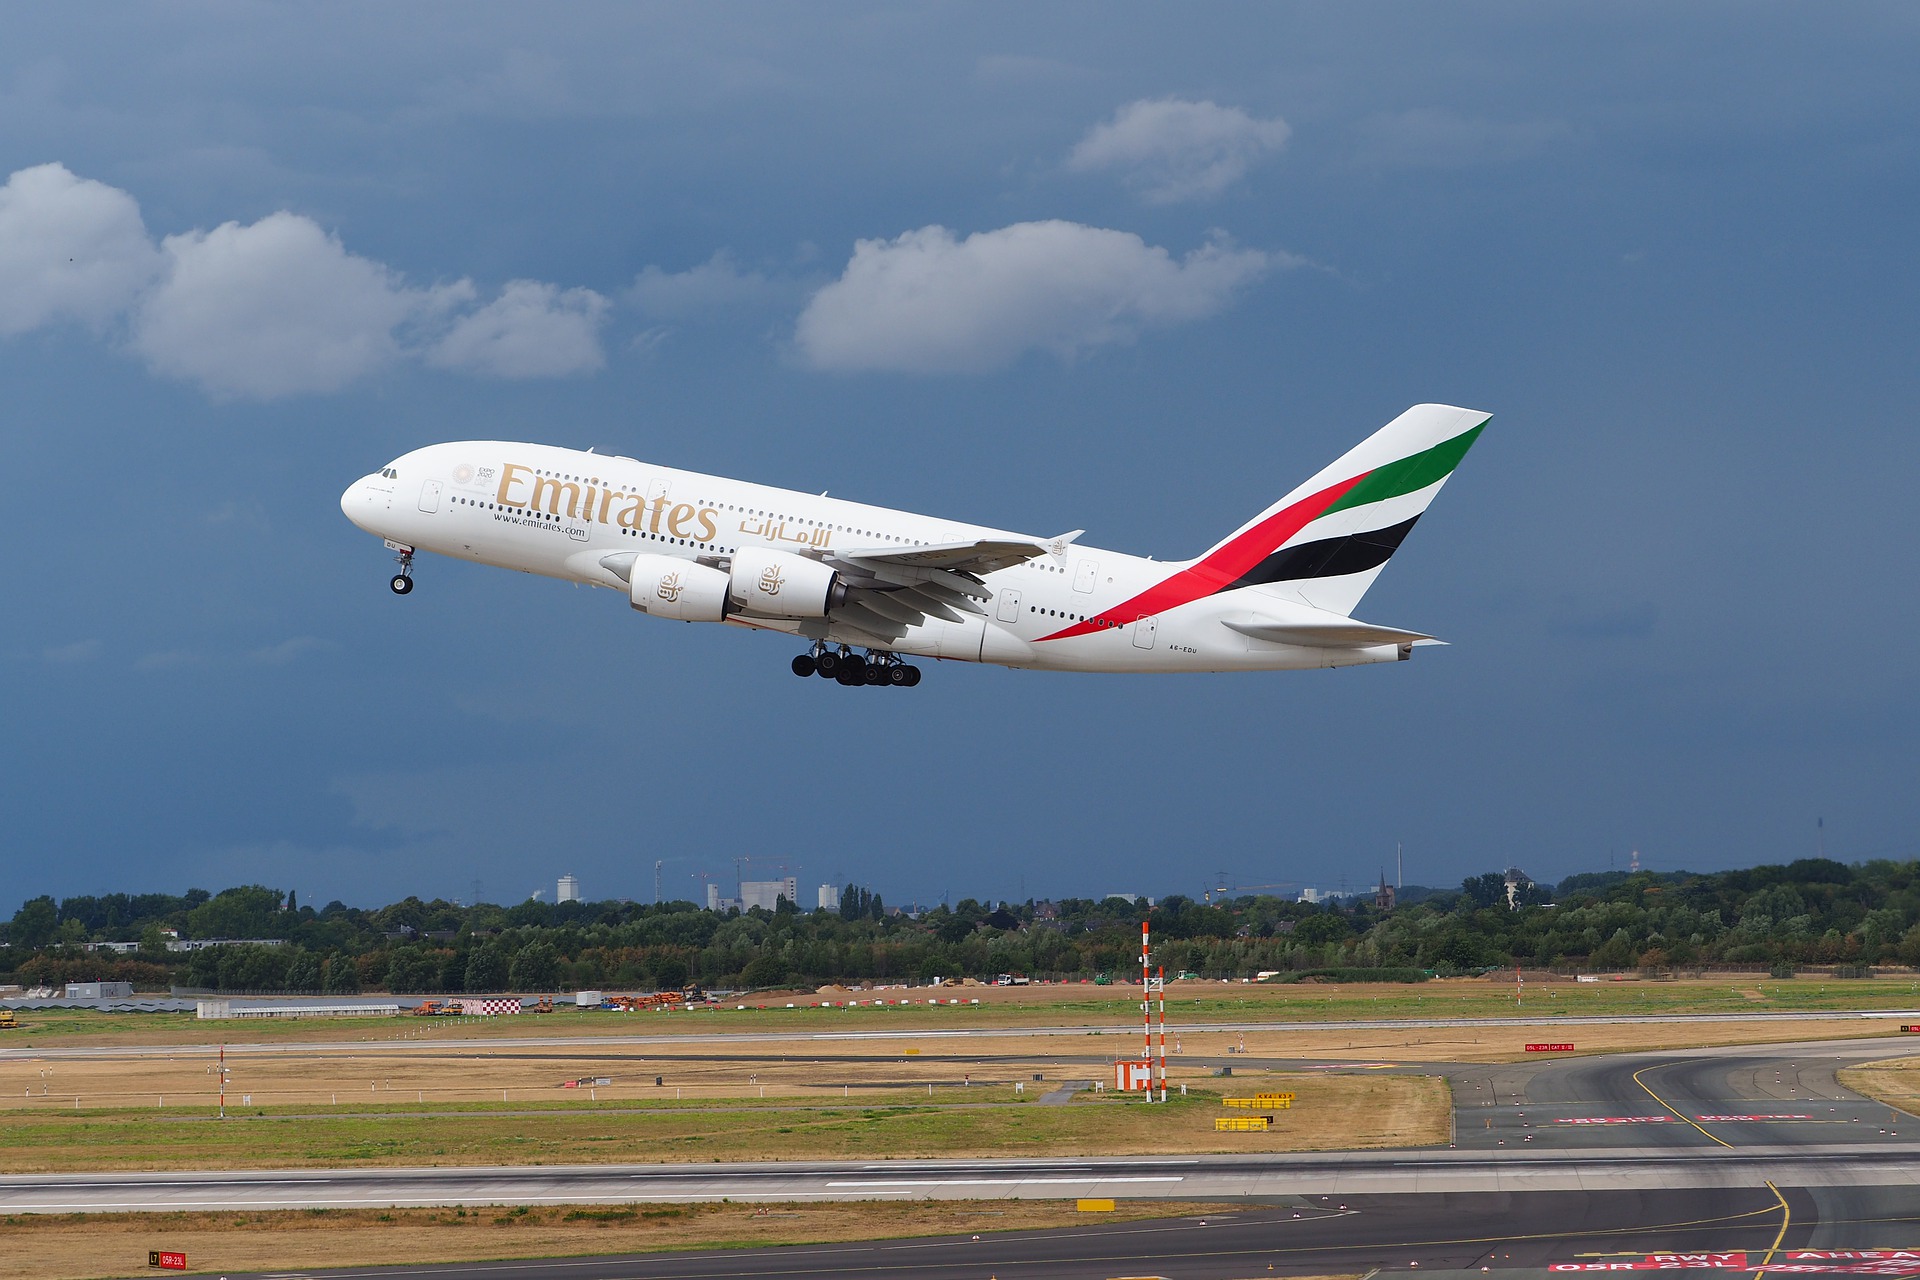 Emirates flight taking off.